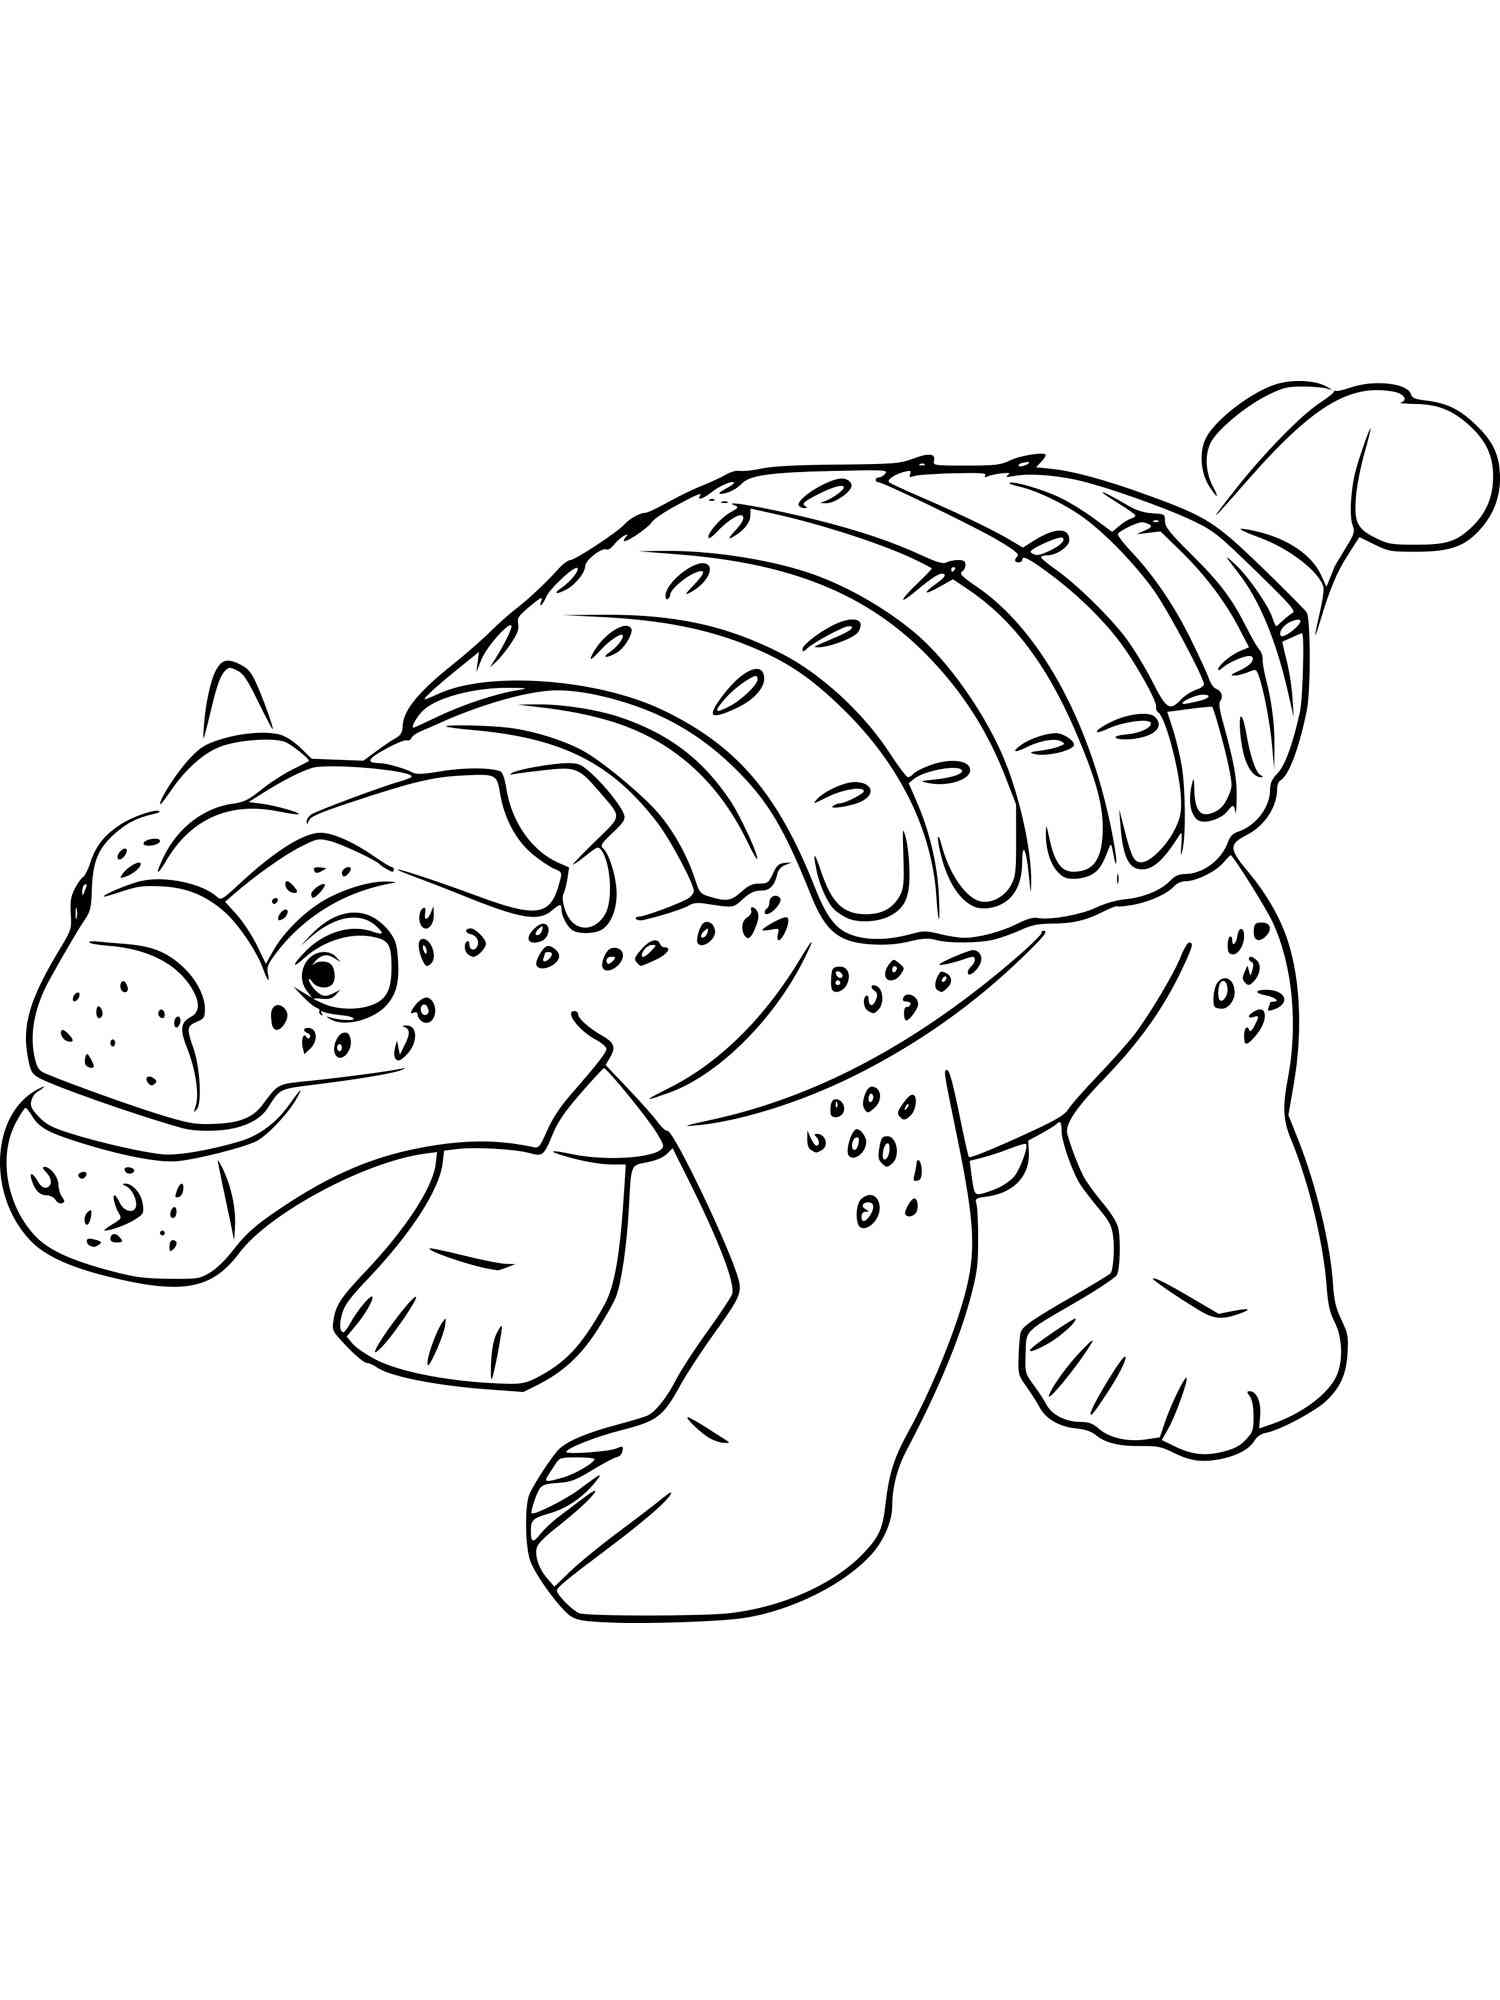 Cartoon Ankylosaurus coloring page